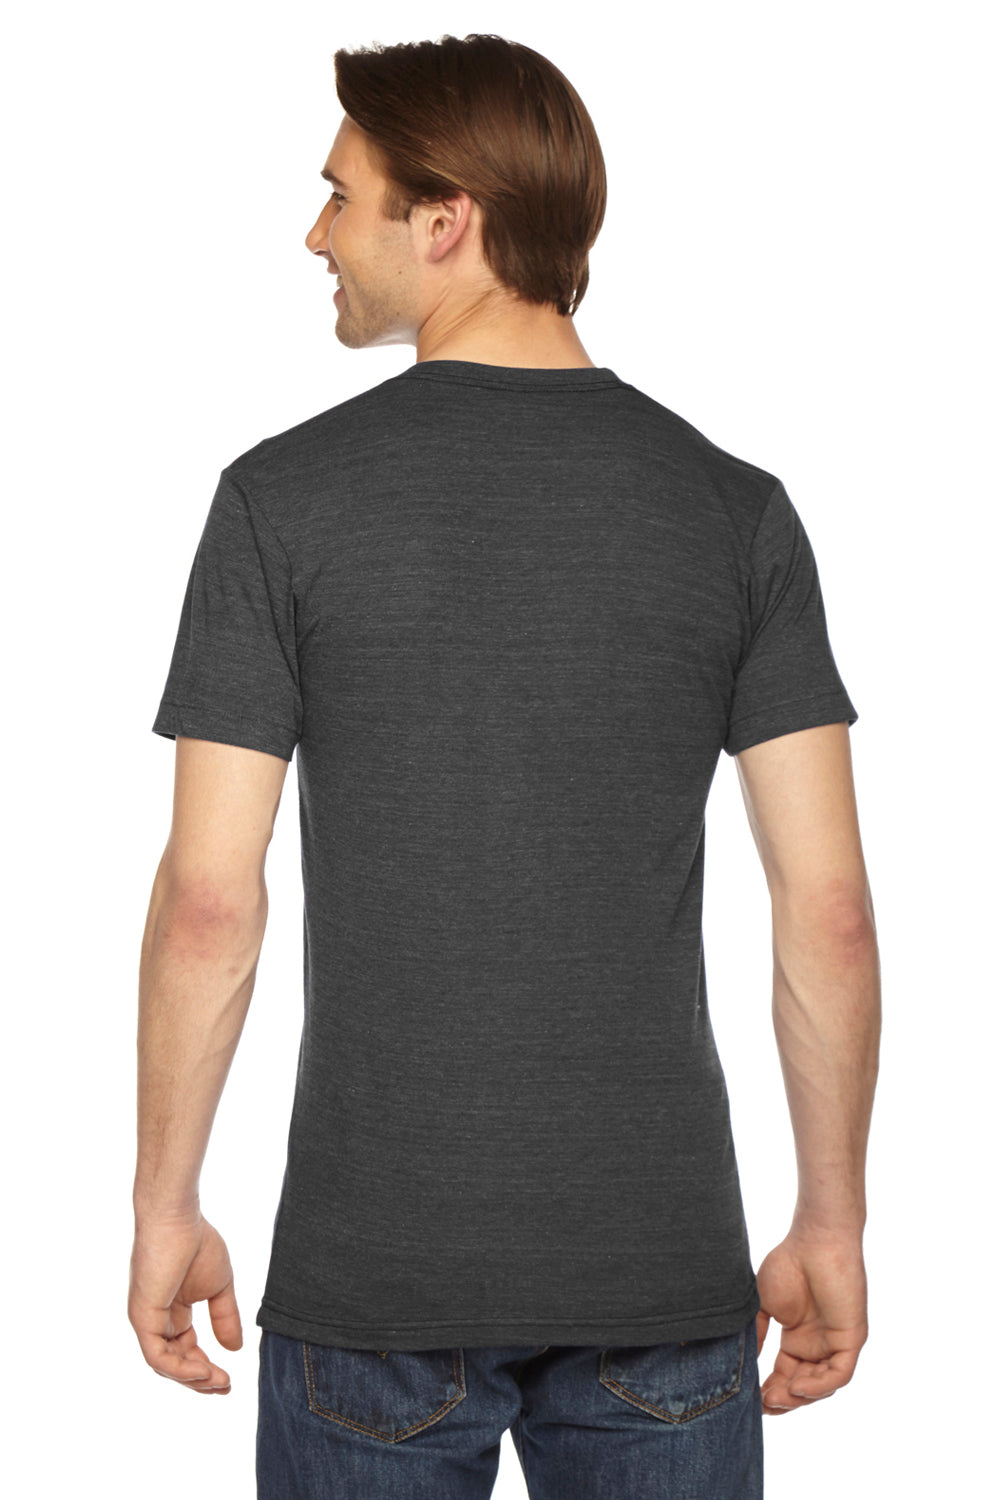 American Apparel TR401 Mens USA Made Track Short Sleeve Crewneck T-Shirt Black Back